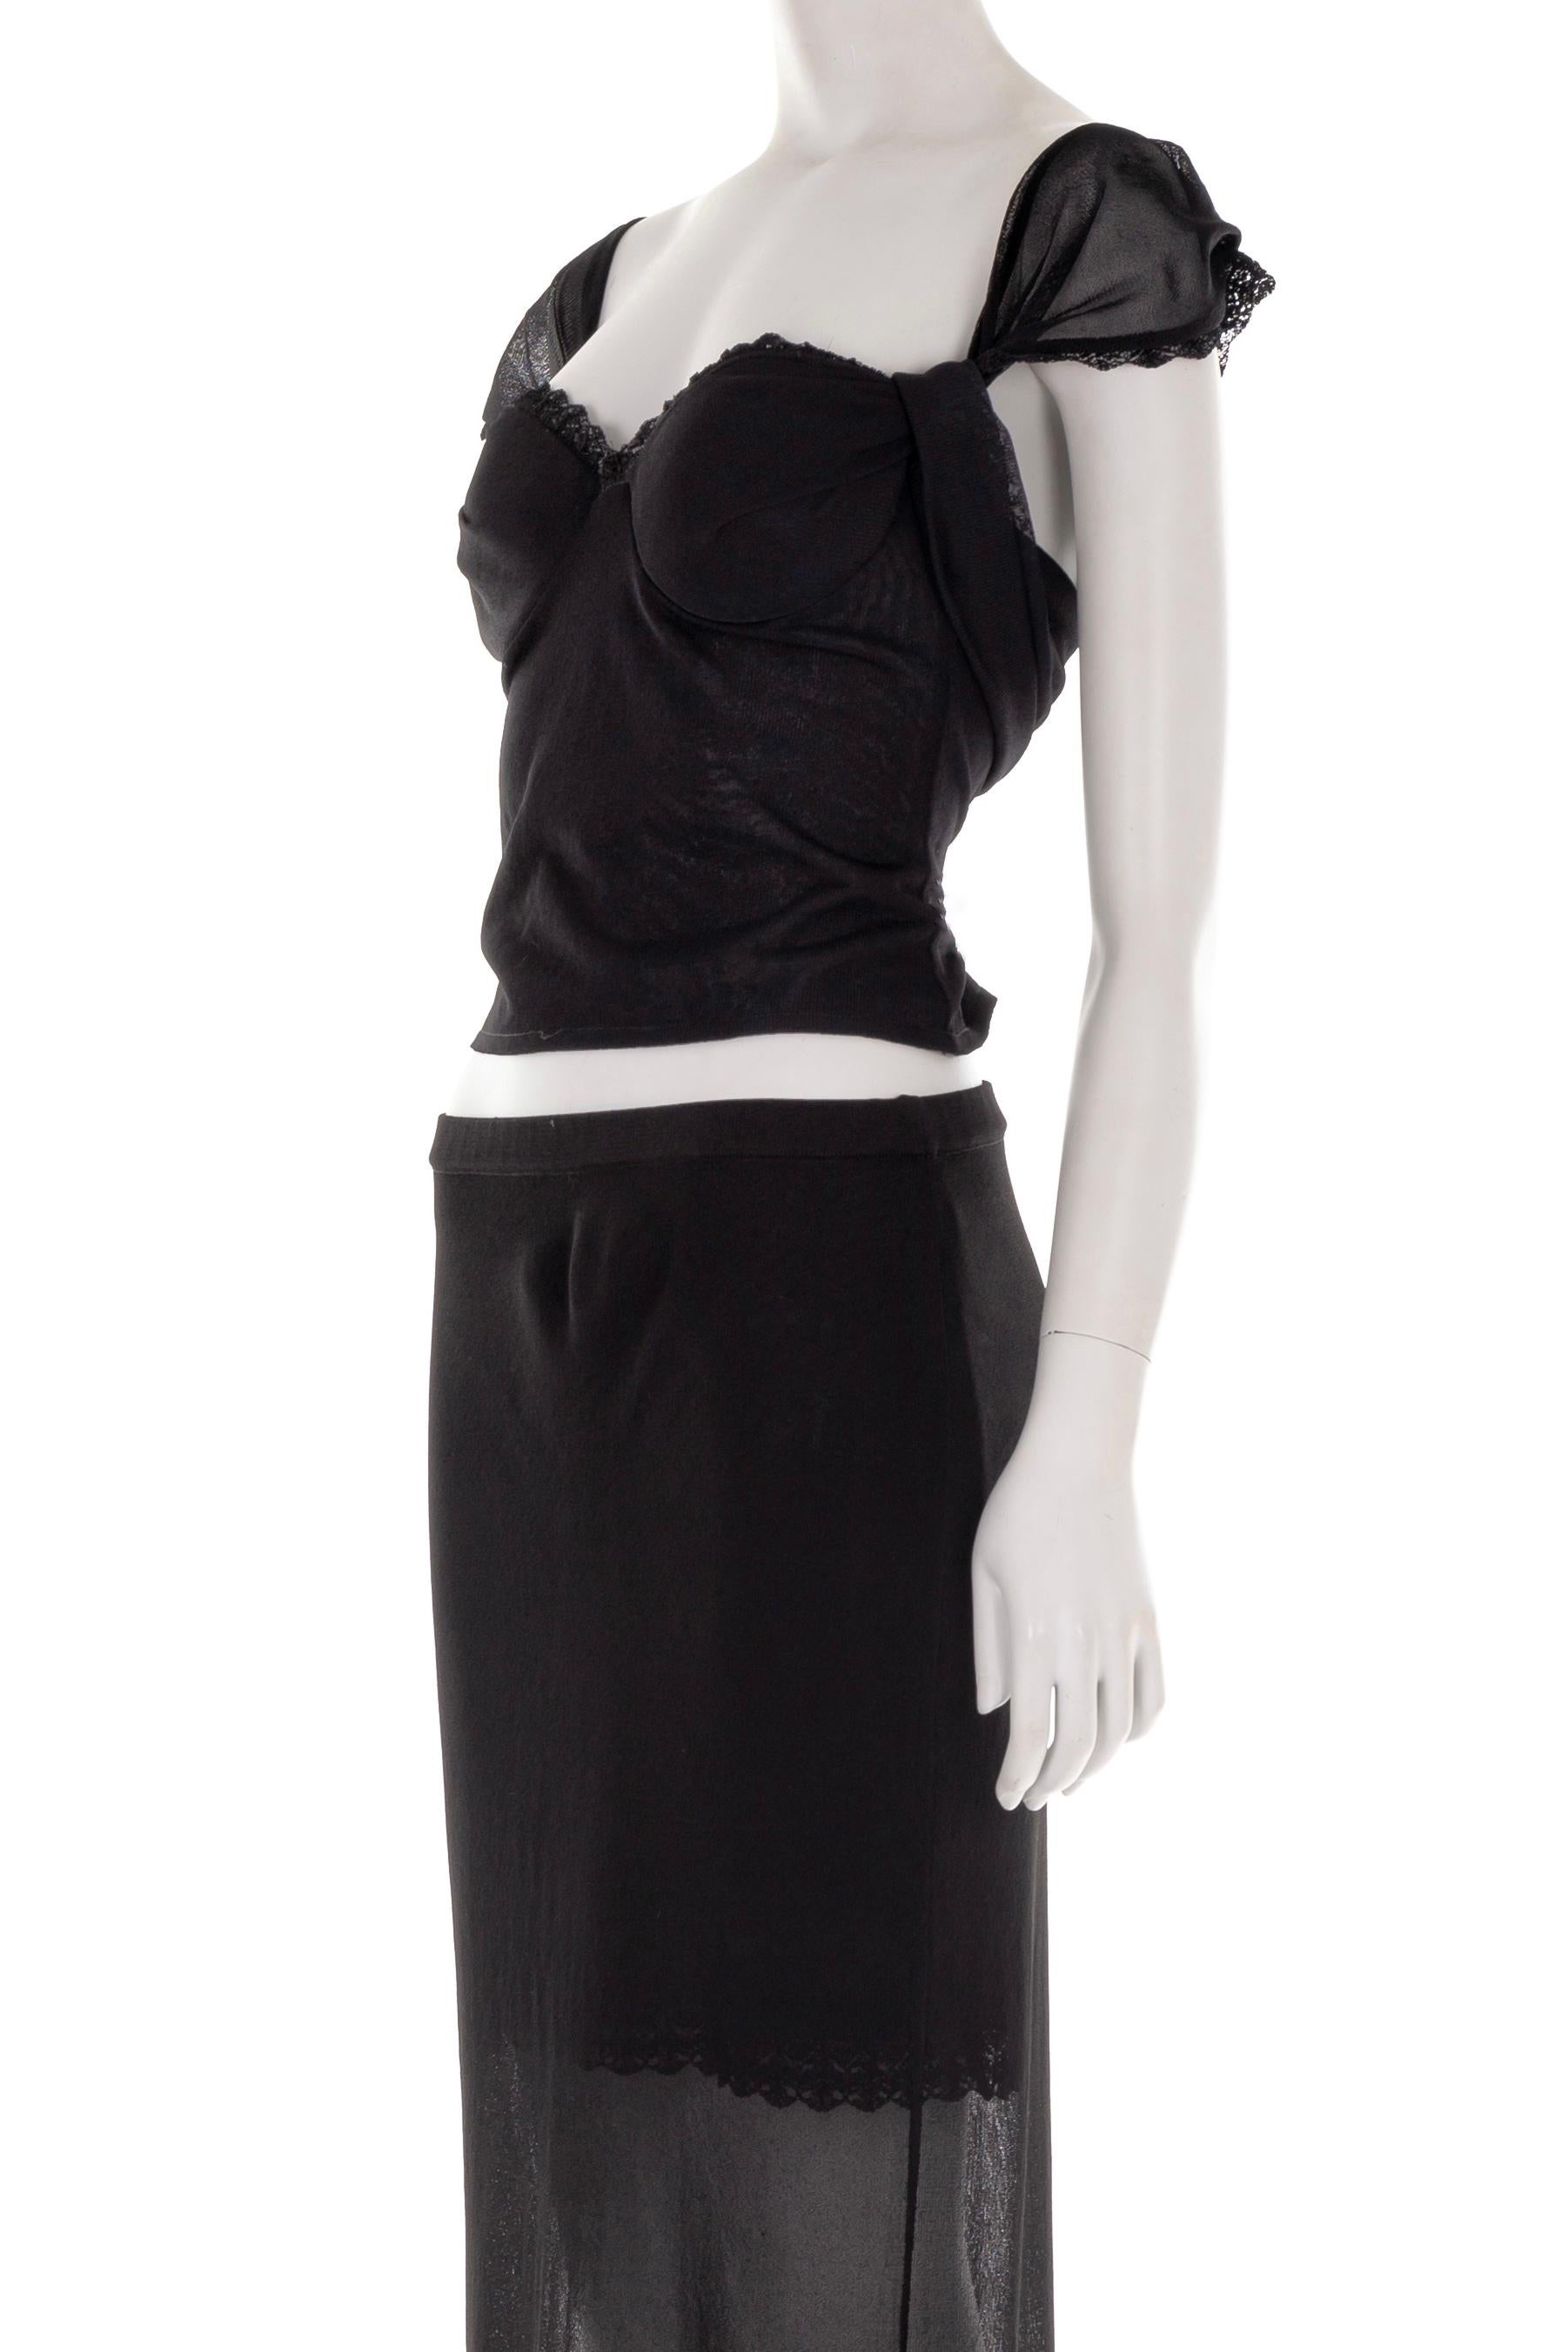 Women's Gianfranco Ferré black lace-trim bustier and skirt set, late 90s For Sale